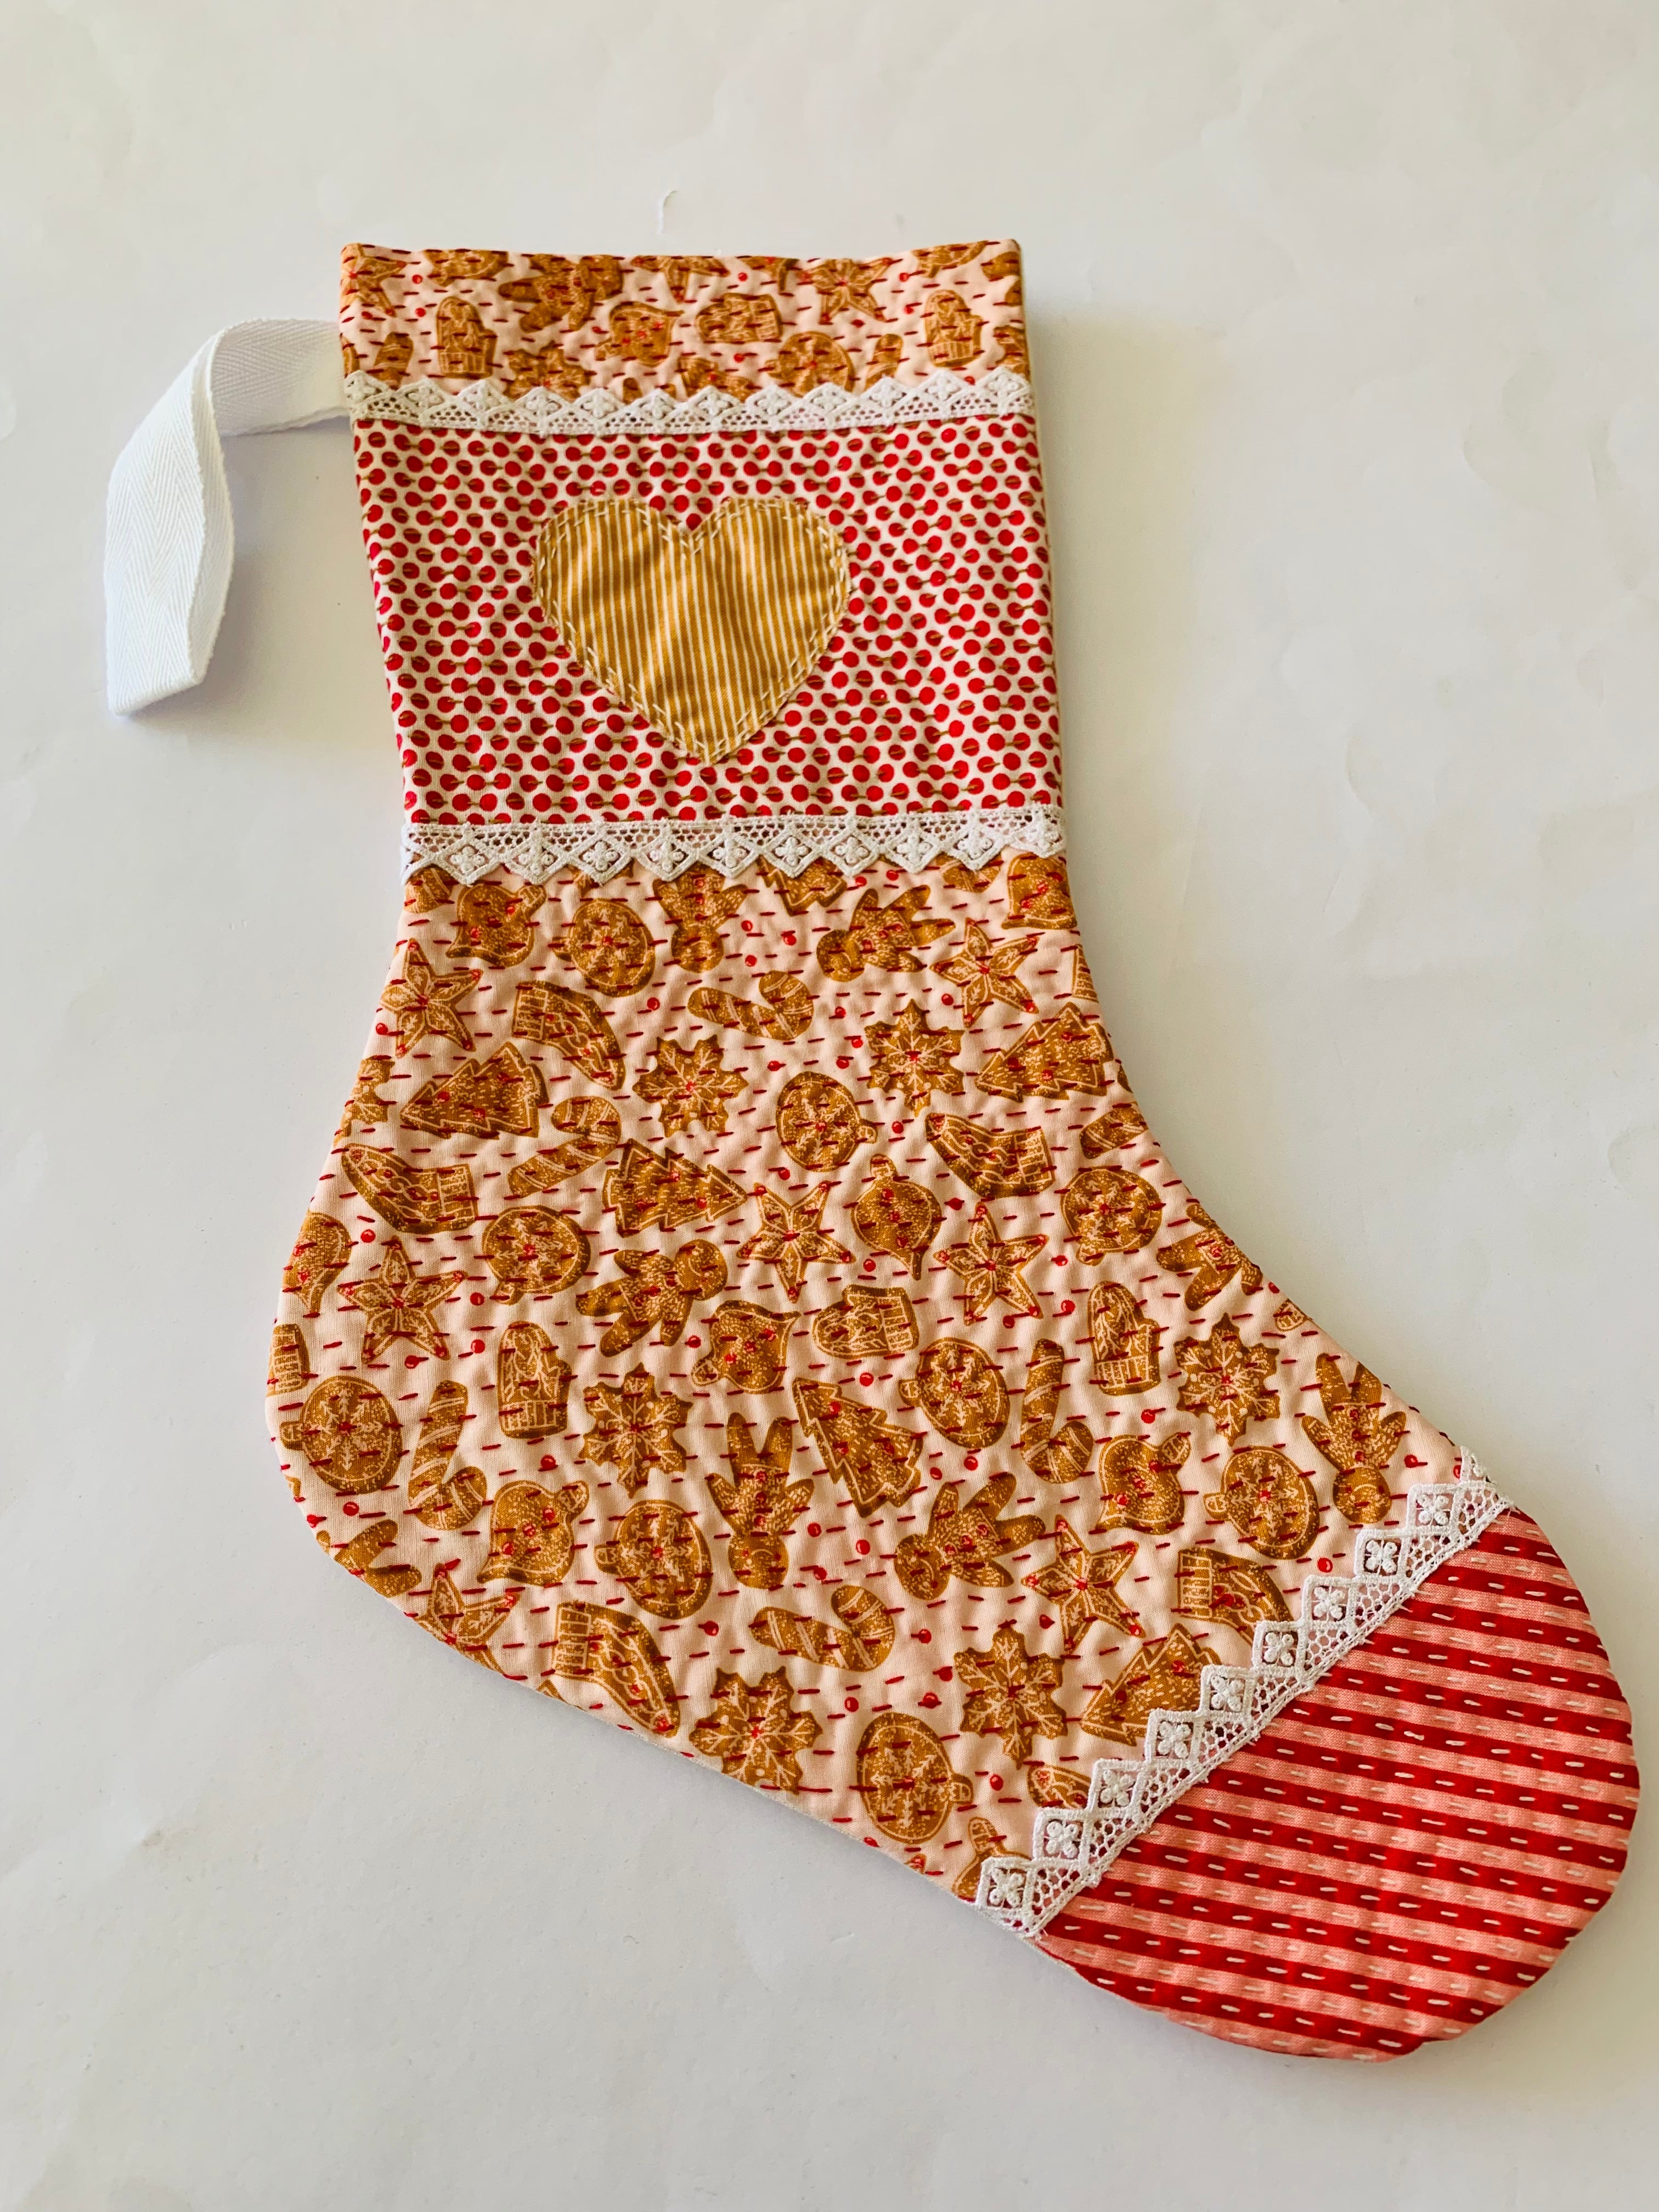 Hand stitched bespoke Christmas Stocking